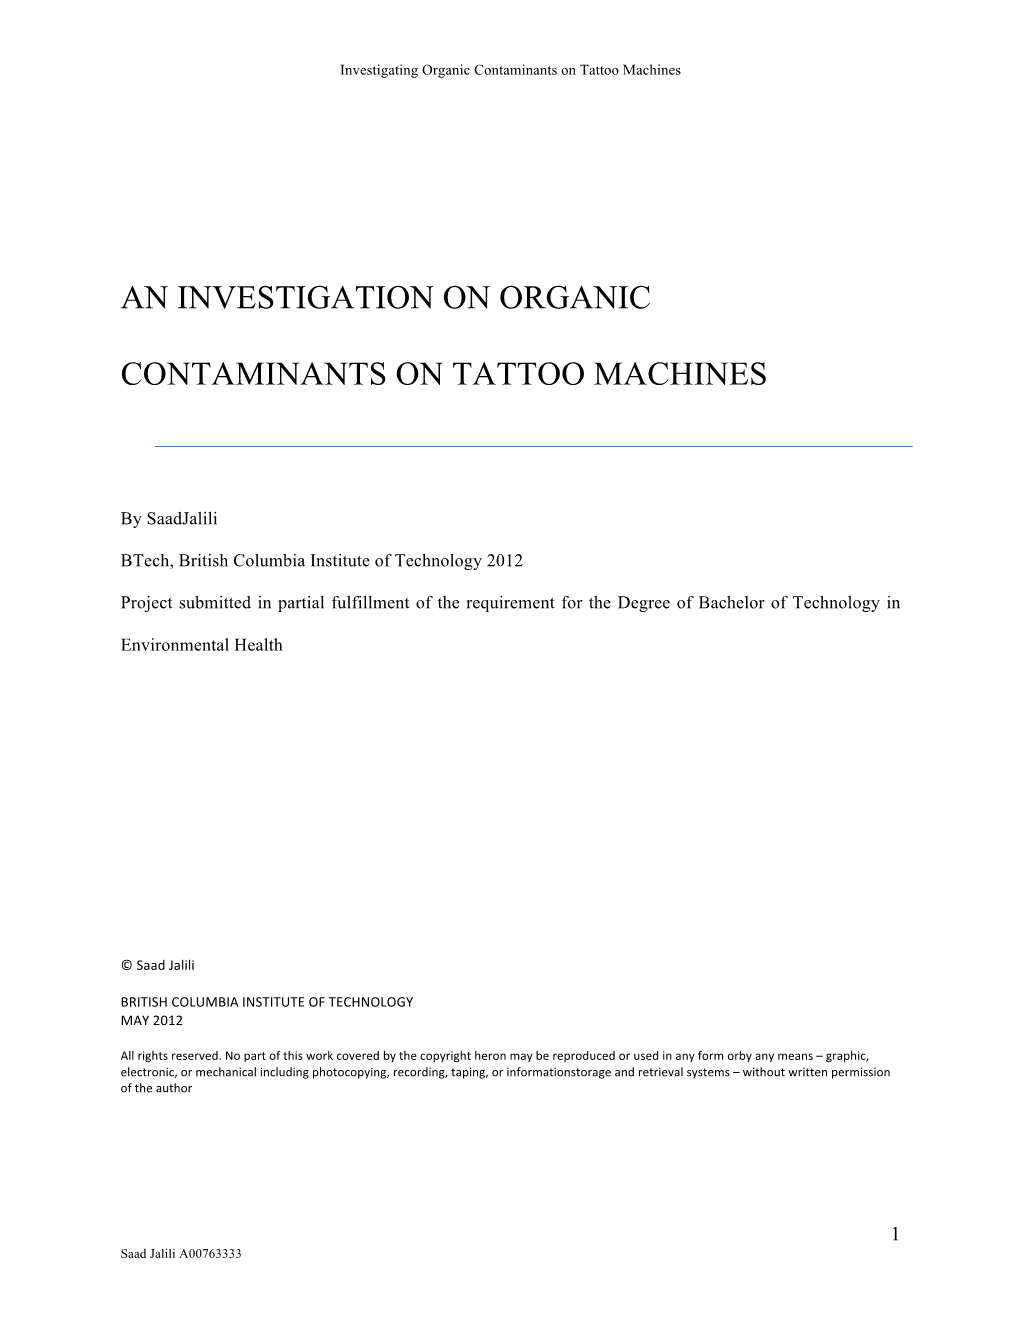 An Investigation on Organic Contaminants on Tattoo